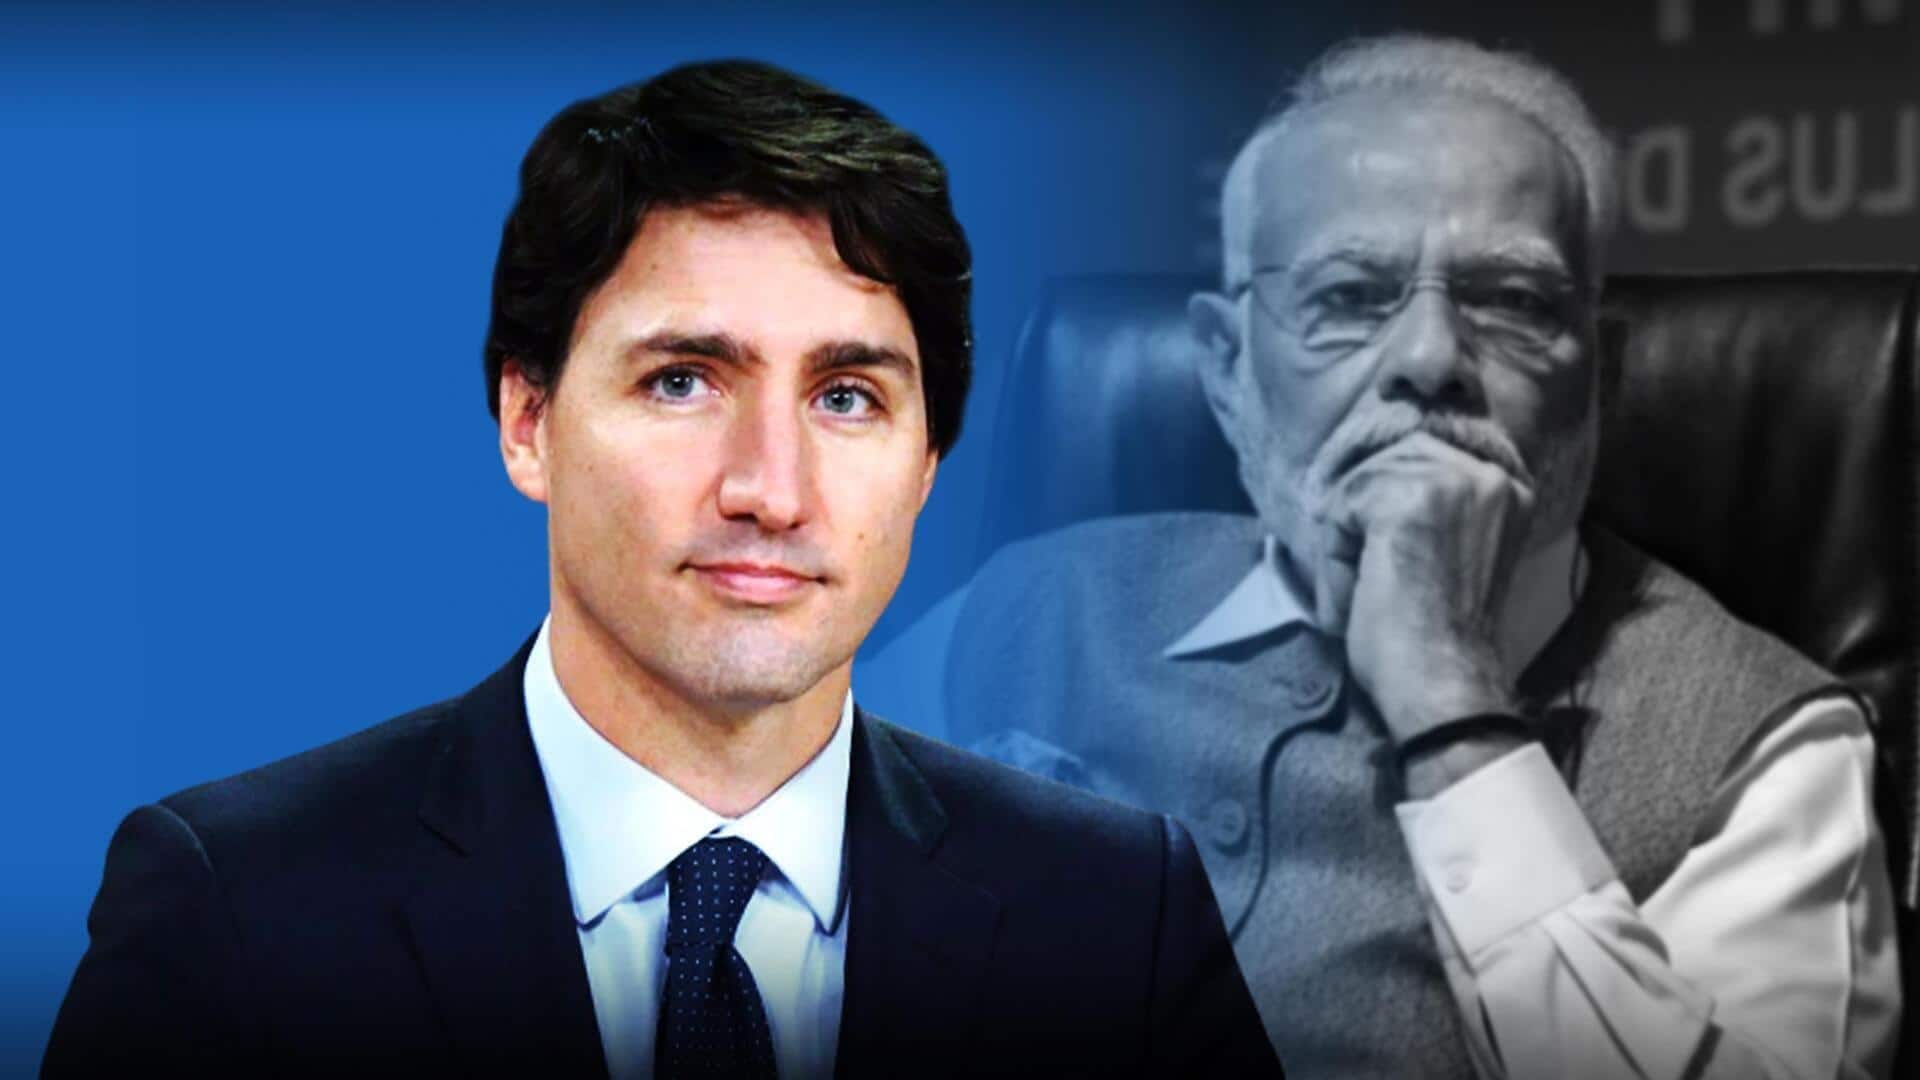 Canada already shared evidence on Nijjar's killing with India: Trudeau